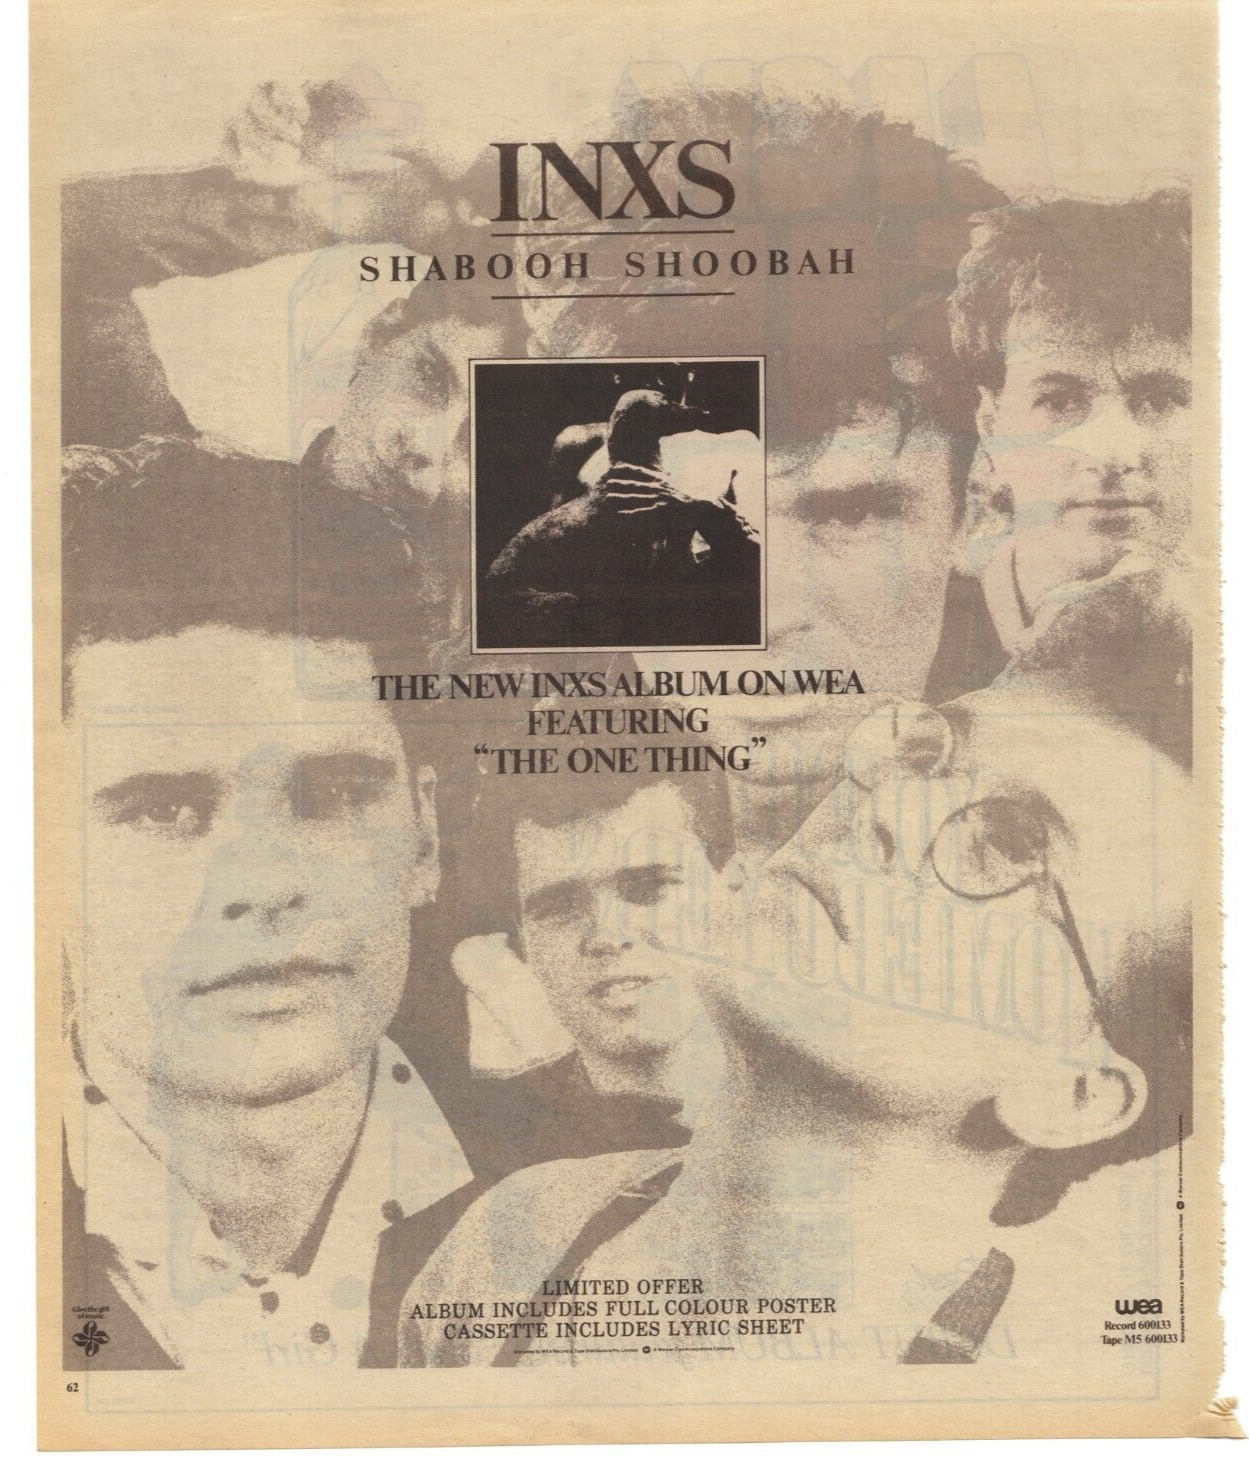 INXS 1982 Studio Album Shabooh Shoobah Australian Vintage Print Ad